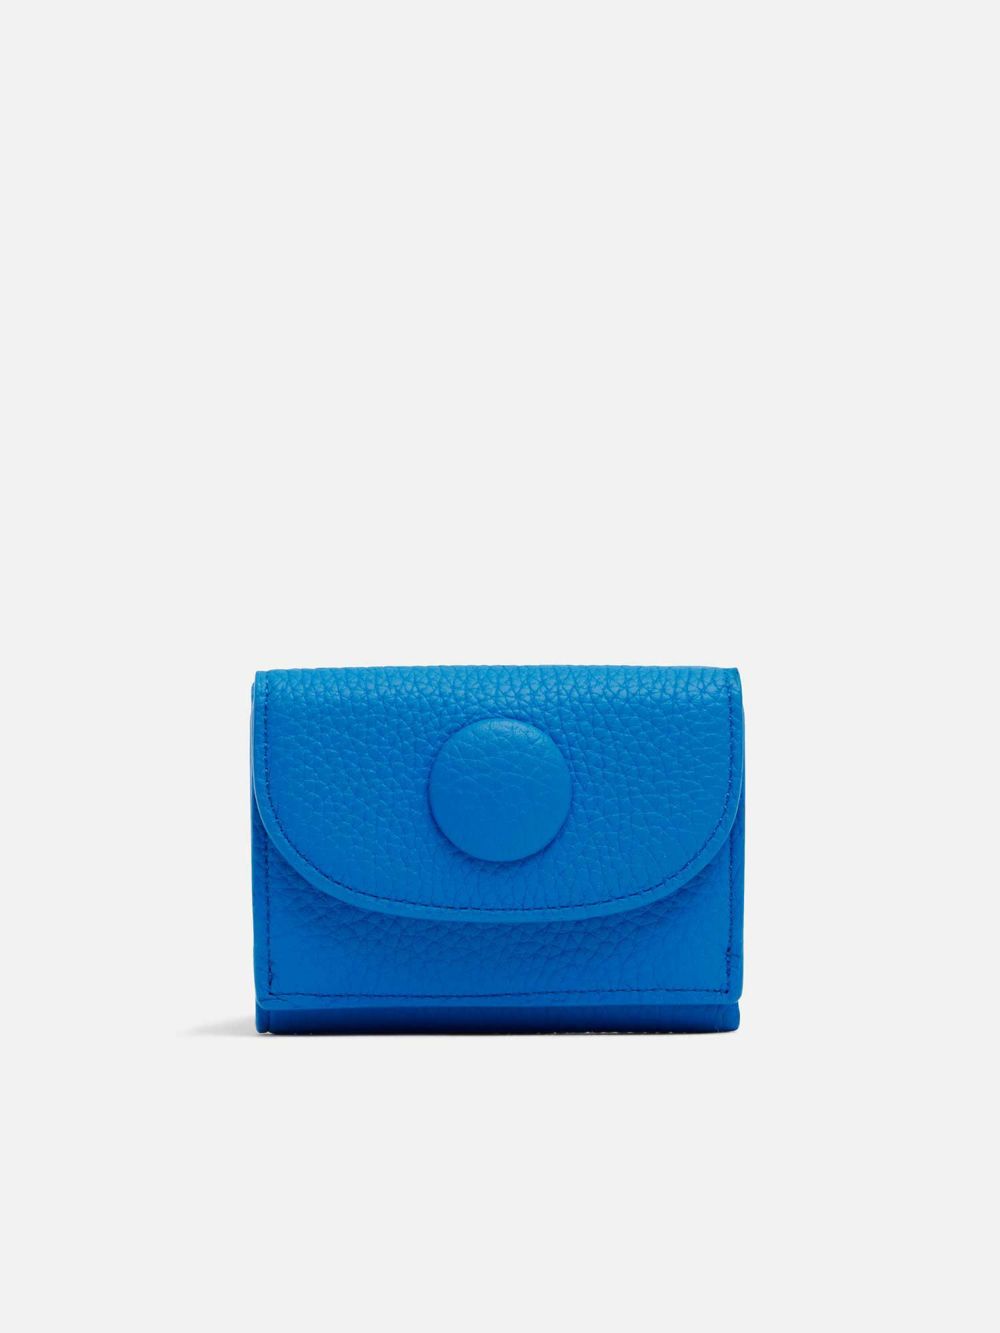 MANACO ミニウォレット ブルー |折り財布 | WAKO公式オンラインブティック | 銀座・和光